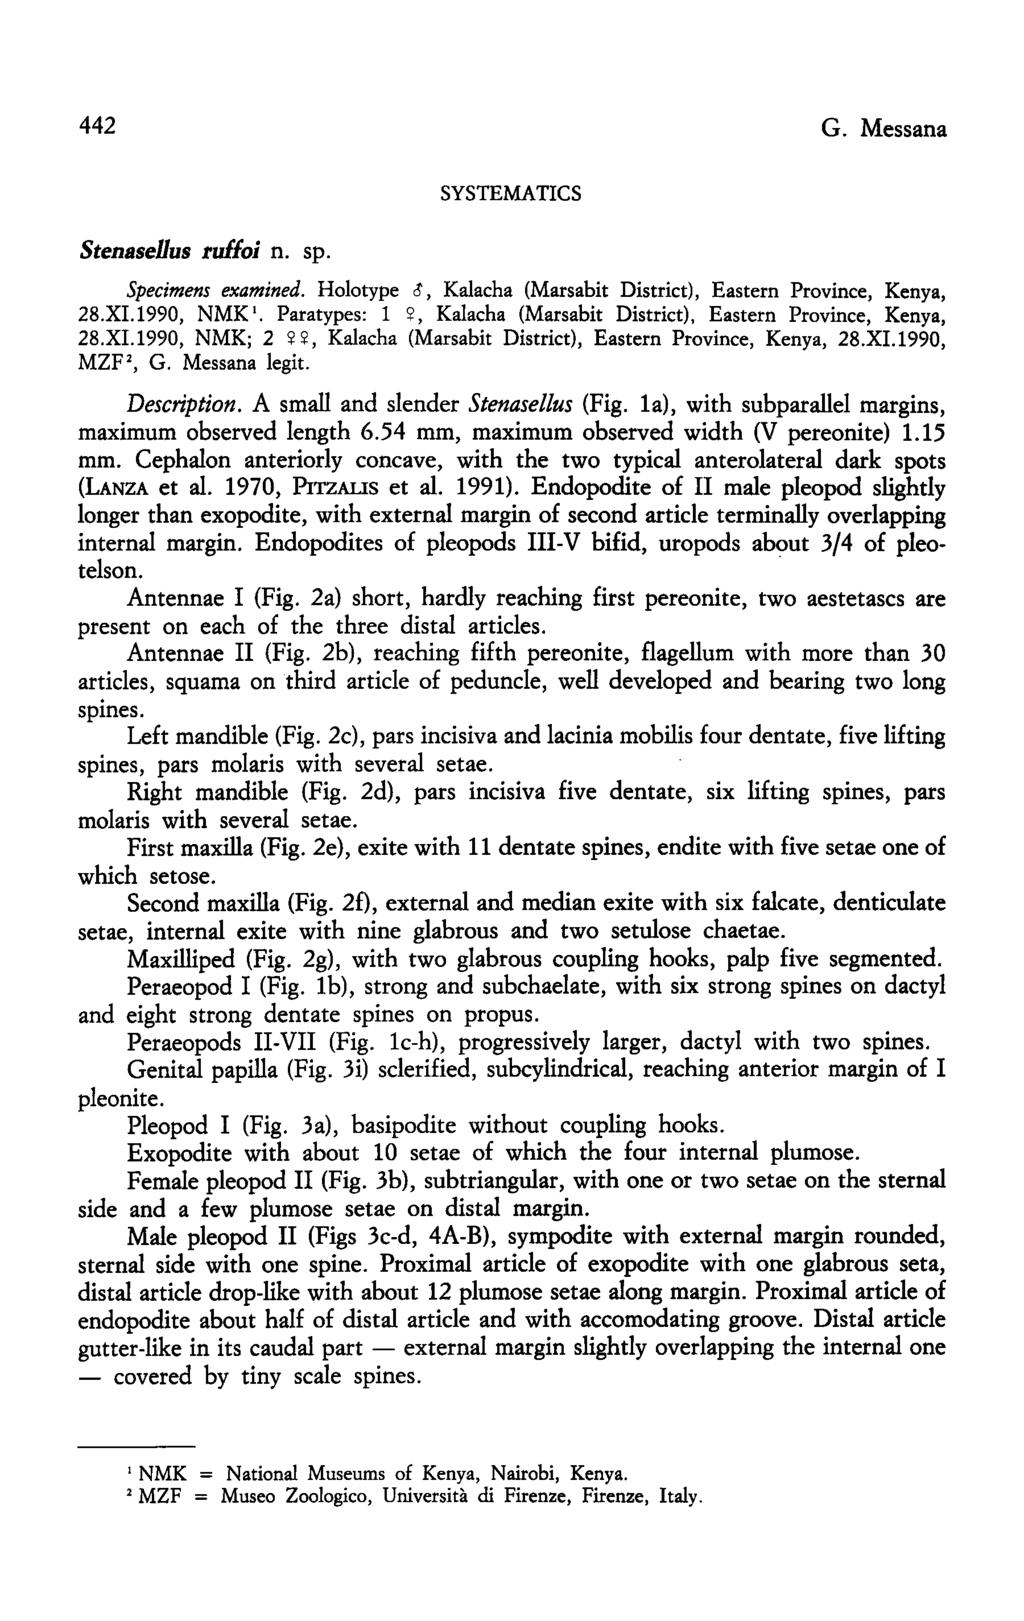 442 G. Messana Stenasellus ruffoi n. sp. SYSTEMATICS Specimens examined. Holotype c, Kalacha (Matsabit District), Eastern Province, Kenya, 28.XI.1990, NMK '.